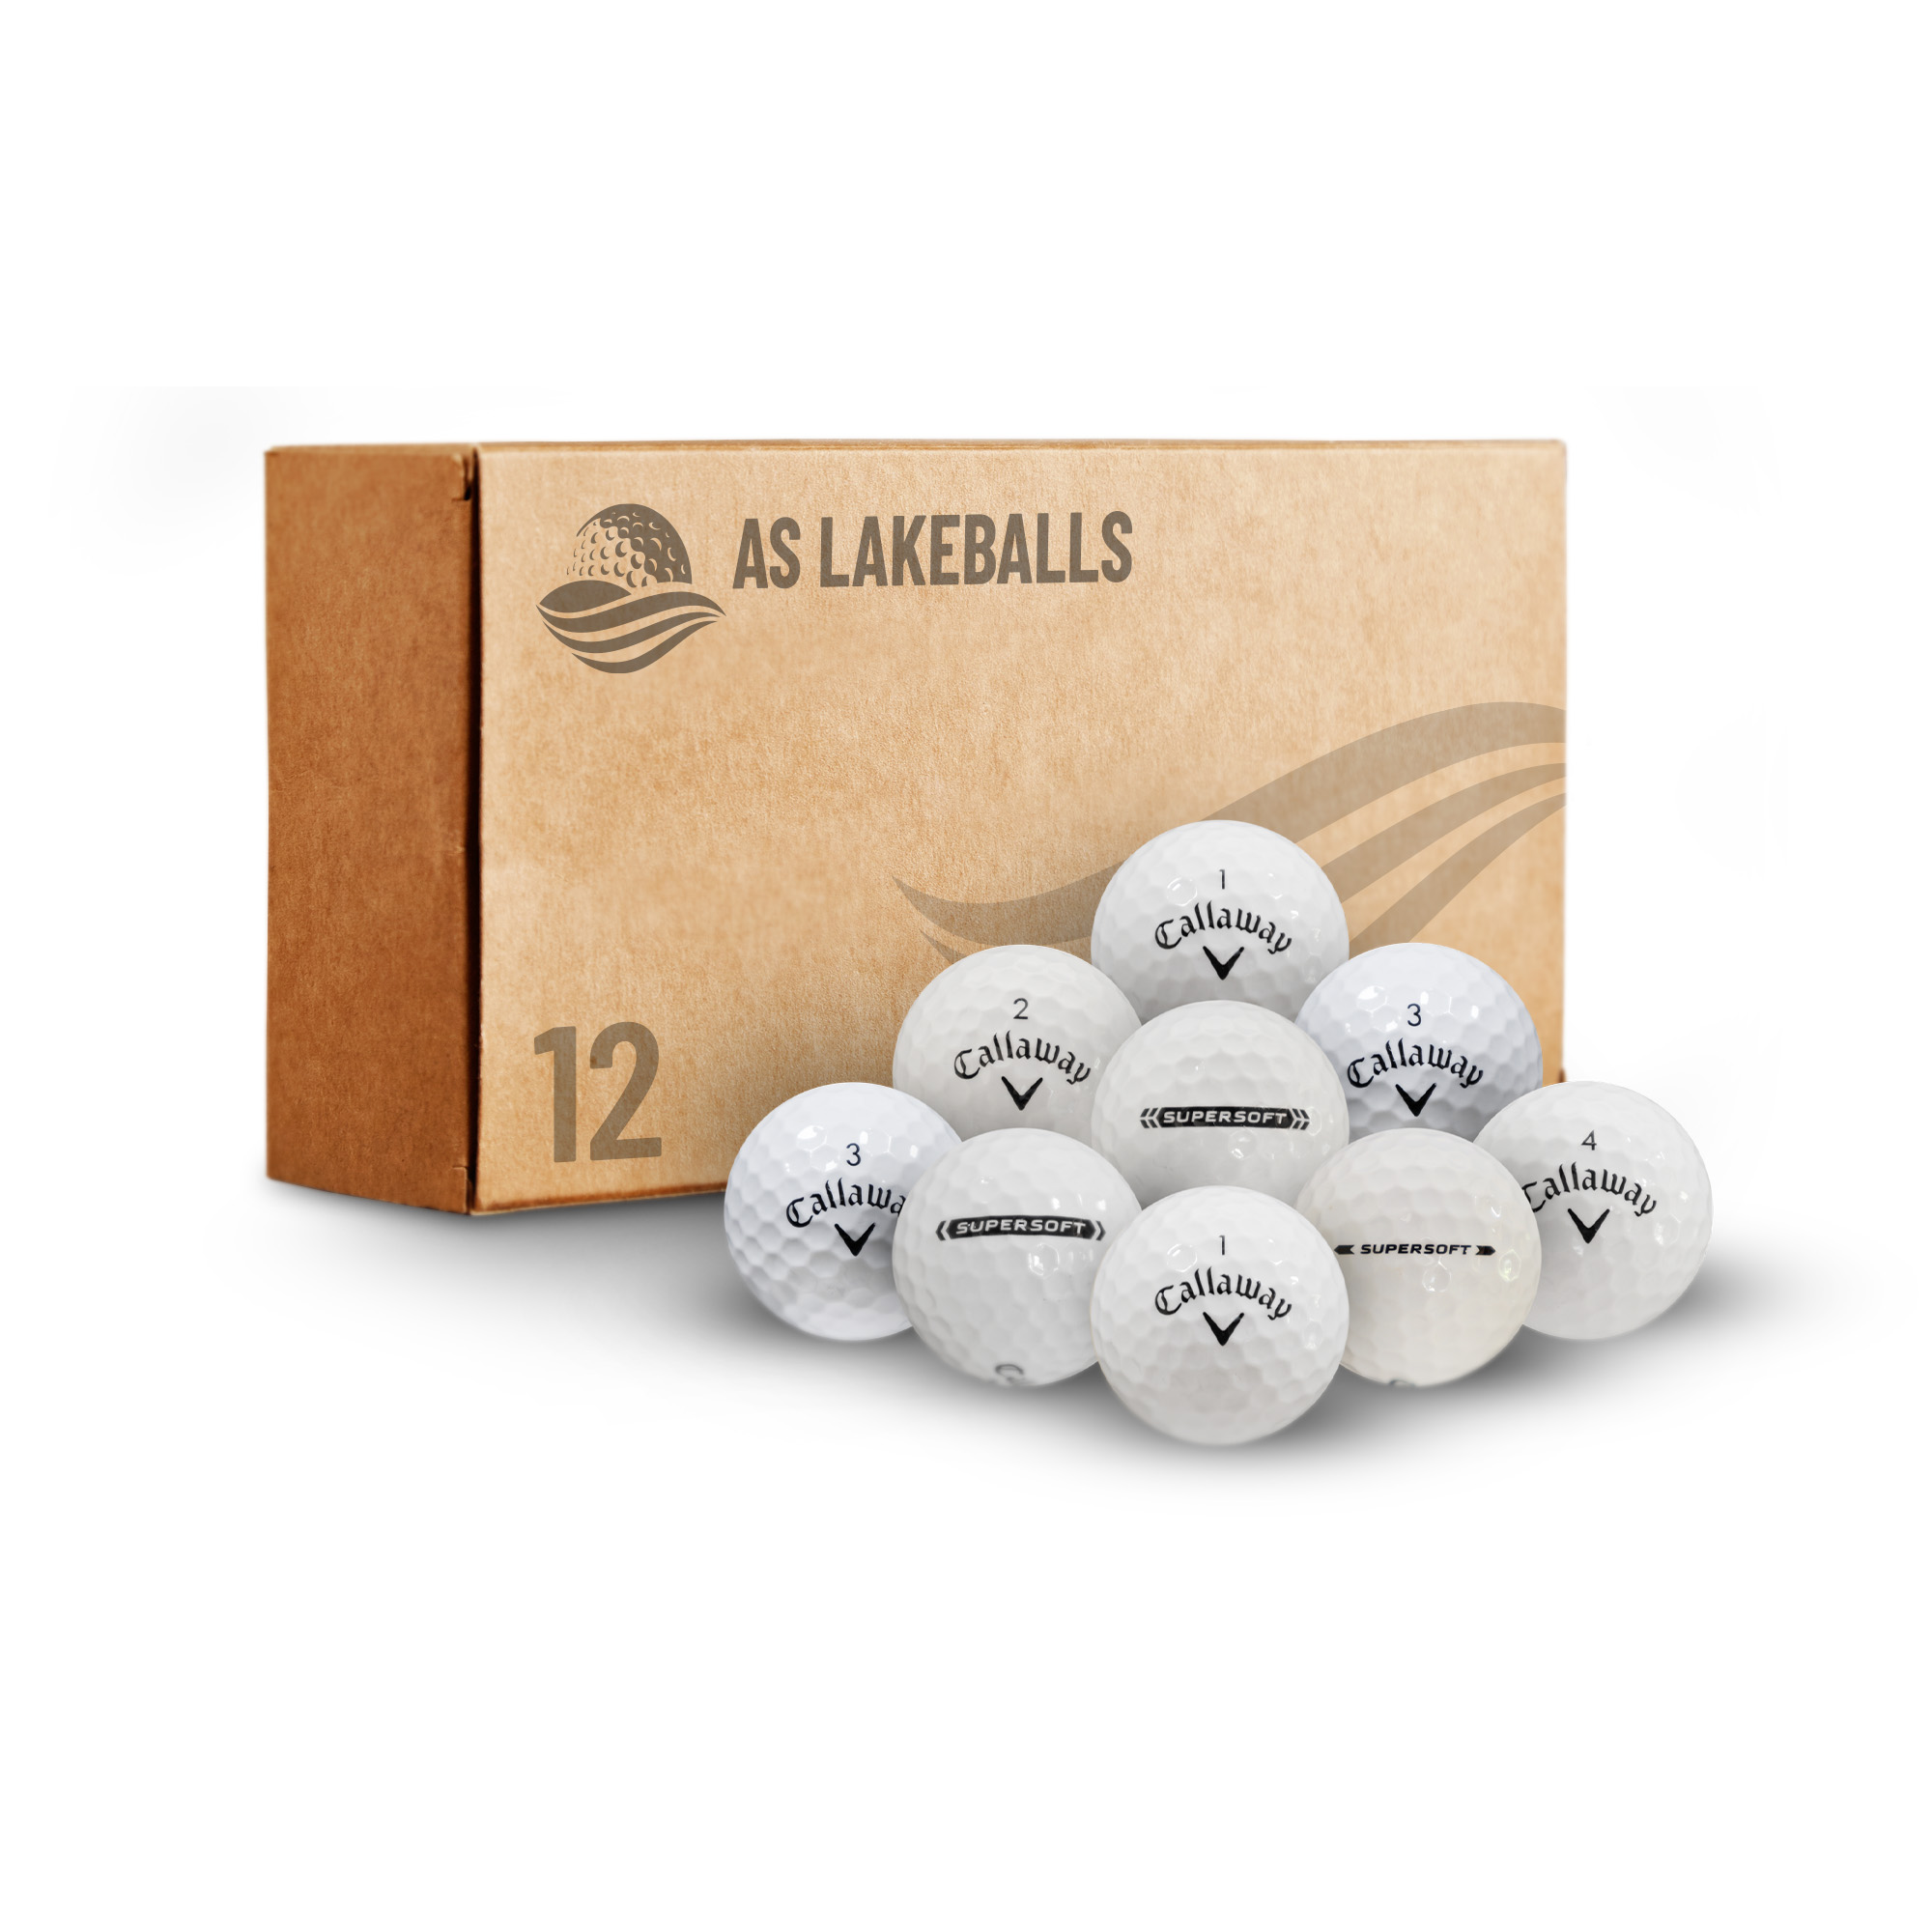 12 Stück Callaway Supersoft AA-AAA Lakeballs bei AS Lakeballs günstig kaufen